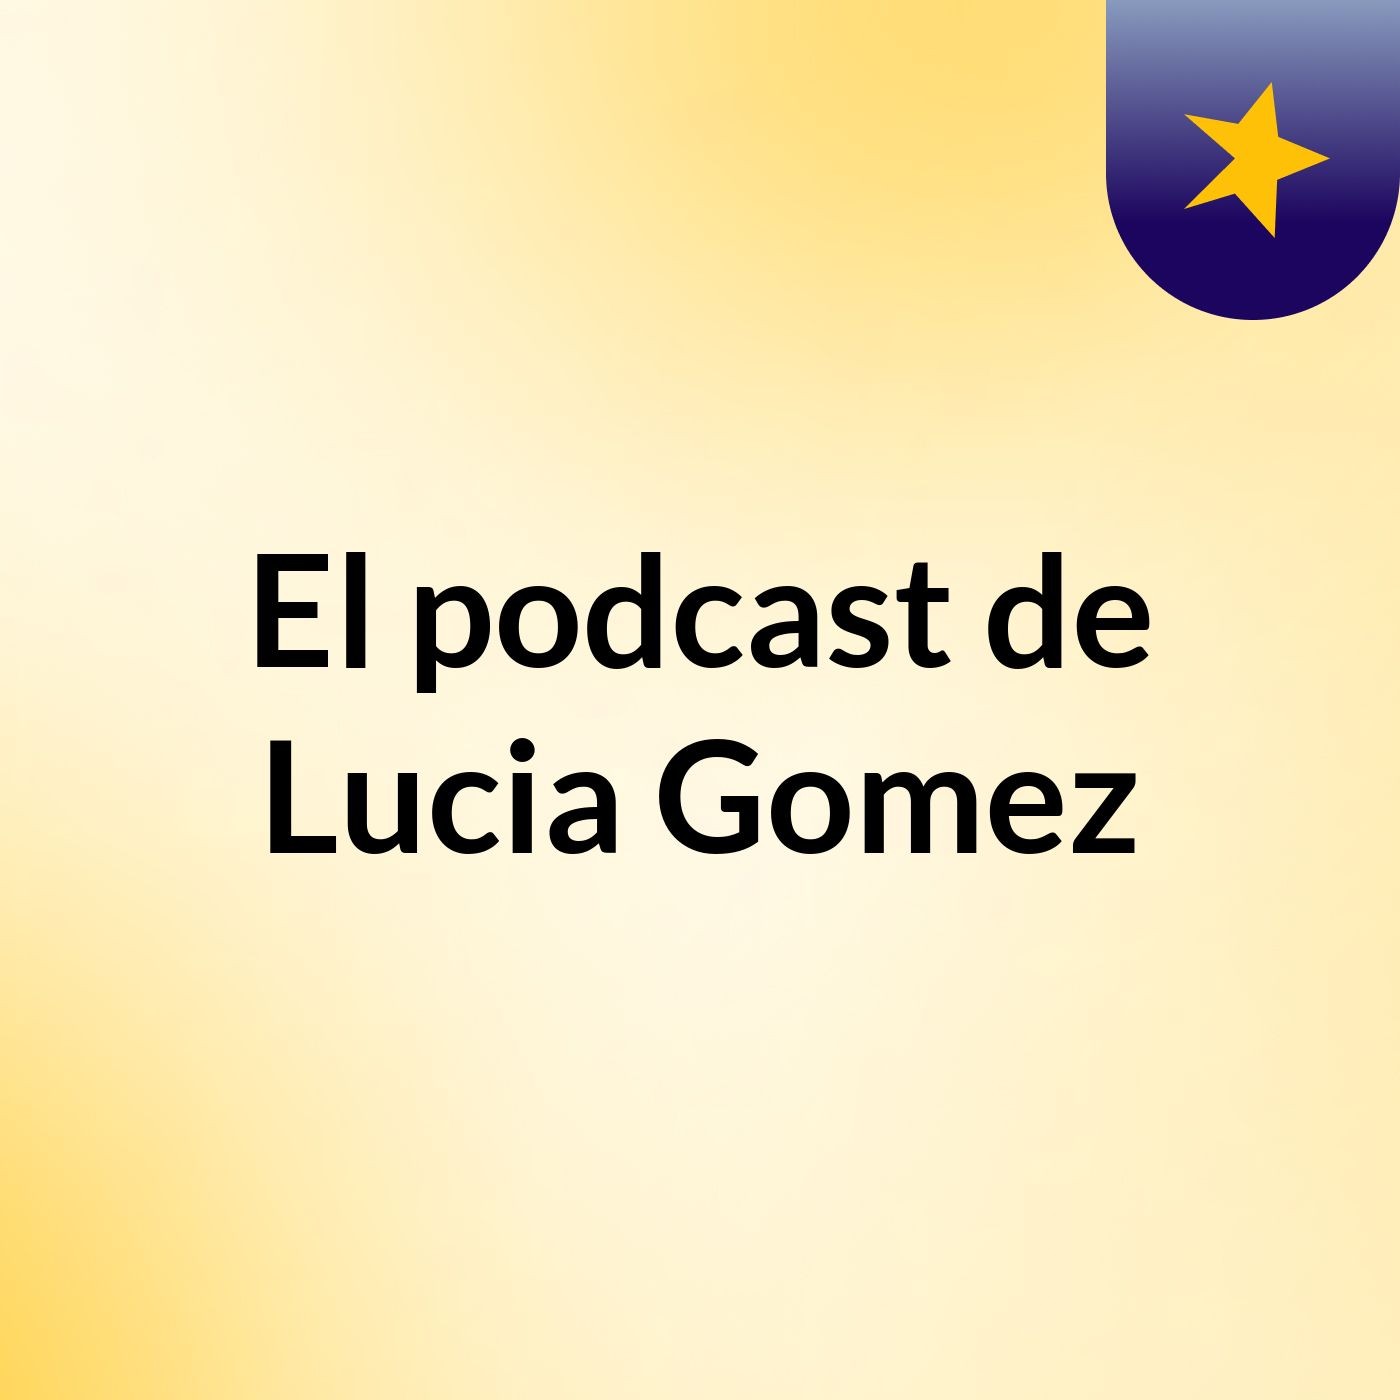 El podcast de Lucia Gomez